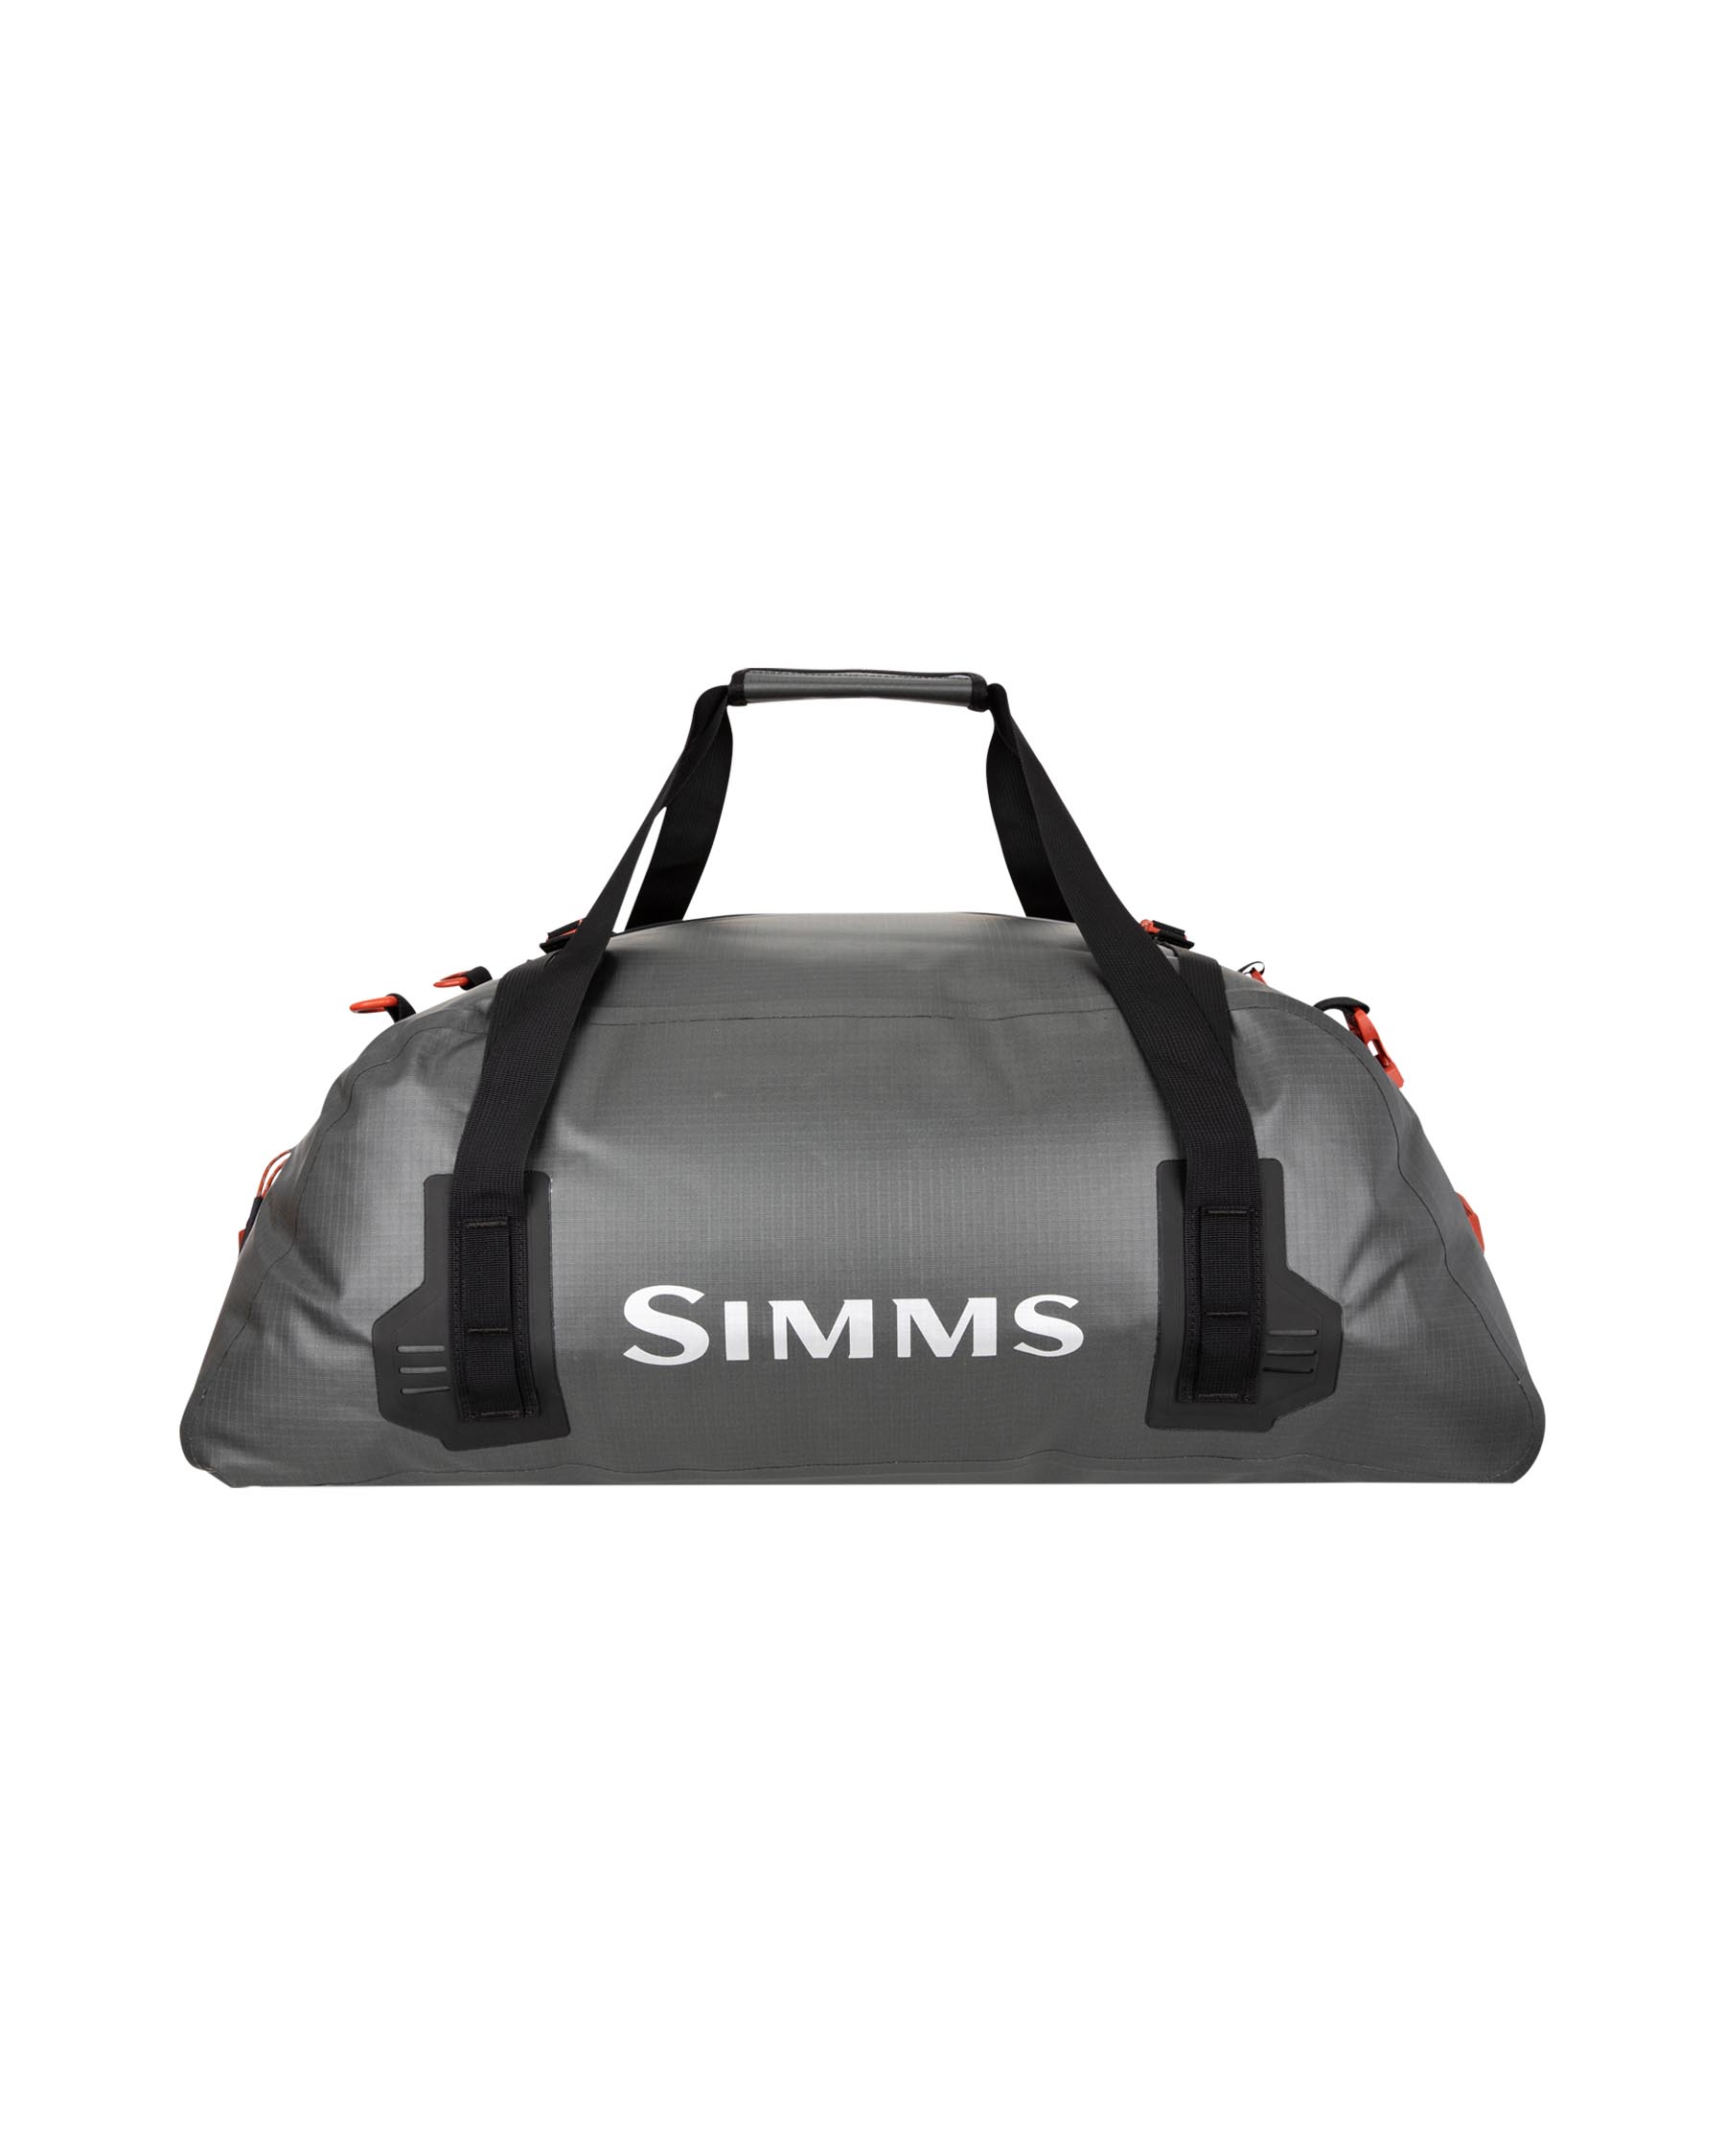 G3 Guide Z Duffel Bag | Simms | マーヴェリック / Maverick